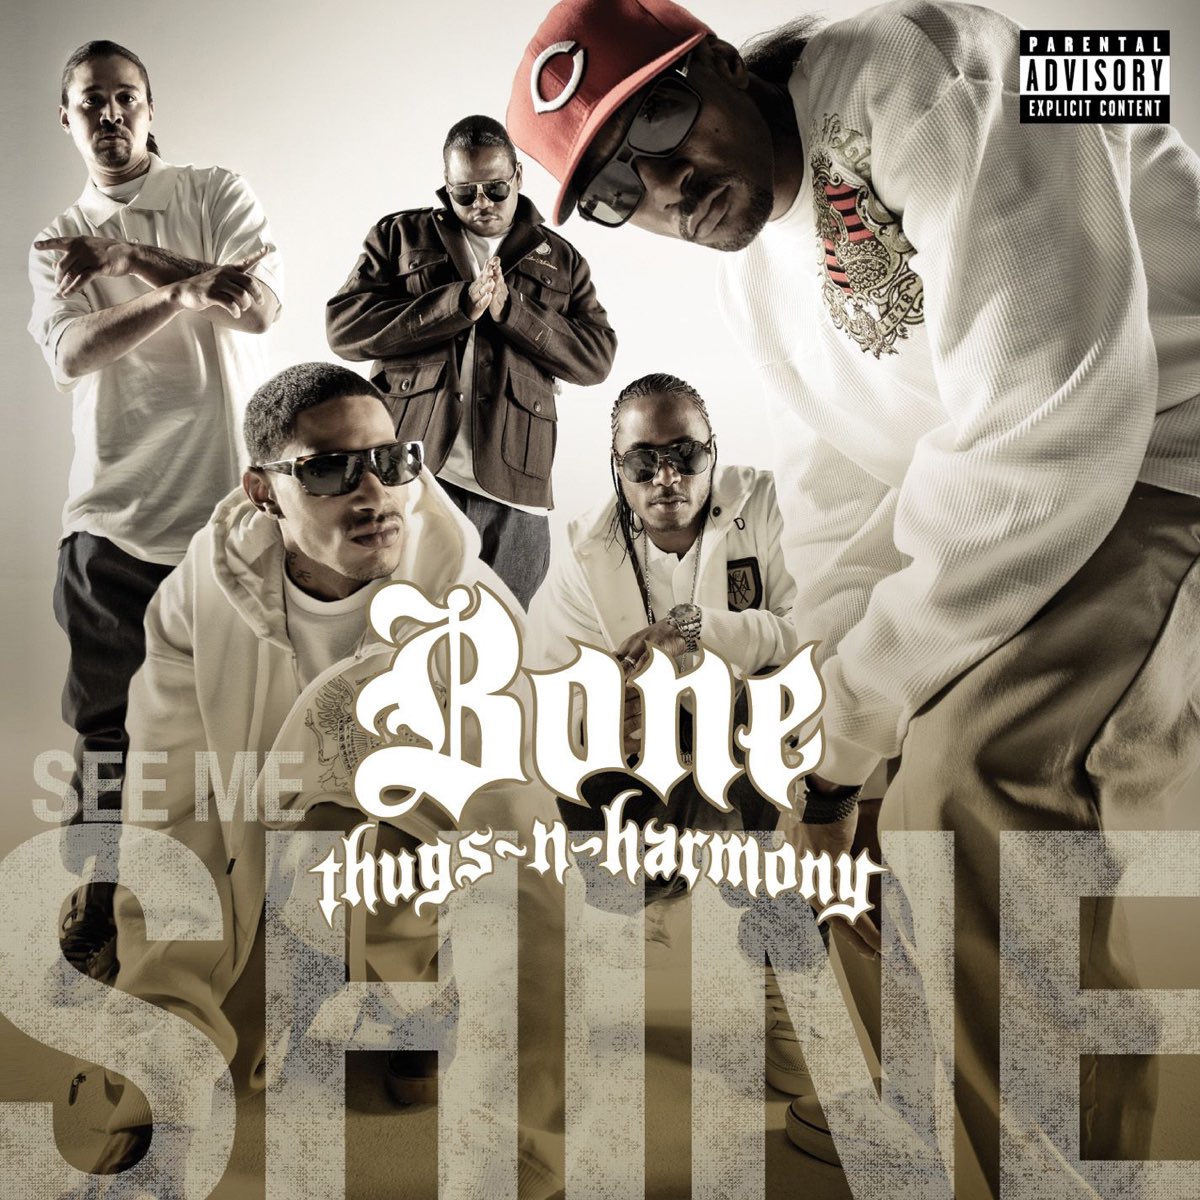 Bone thugs harmony. Bone Thugs-n-Harmony. Репер Bone Thugs. Группа Bone Thugs-n-Harmony на оскоре. Bizzy Bone, Layzie Bone - Bone brothers (2005) обложка.